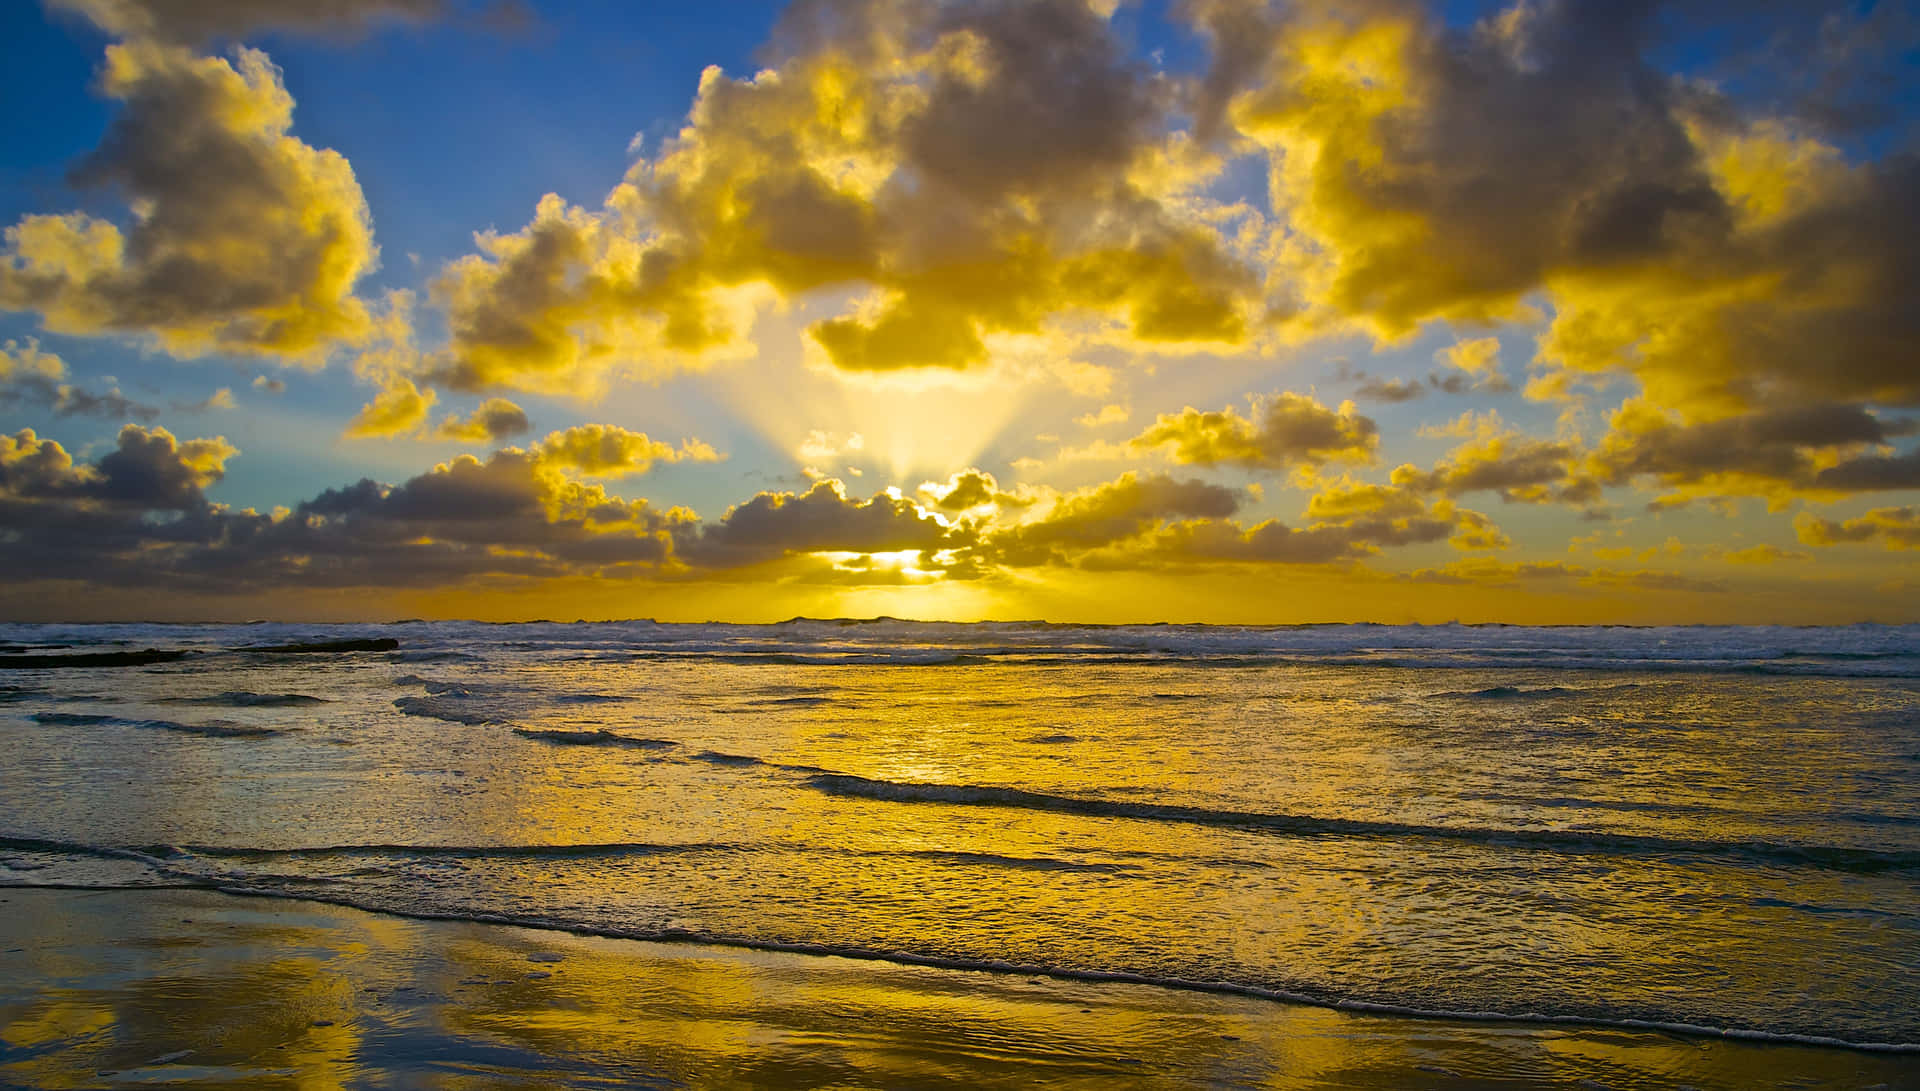 "Soak Up the Last Rays of Sun at the Beach Sunset"